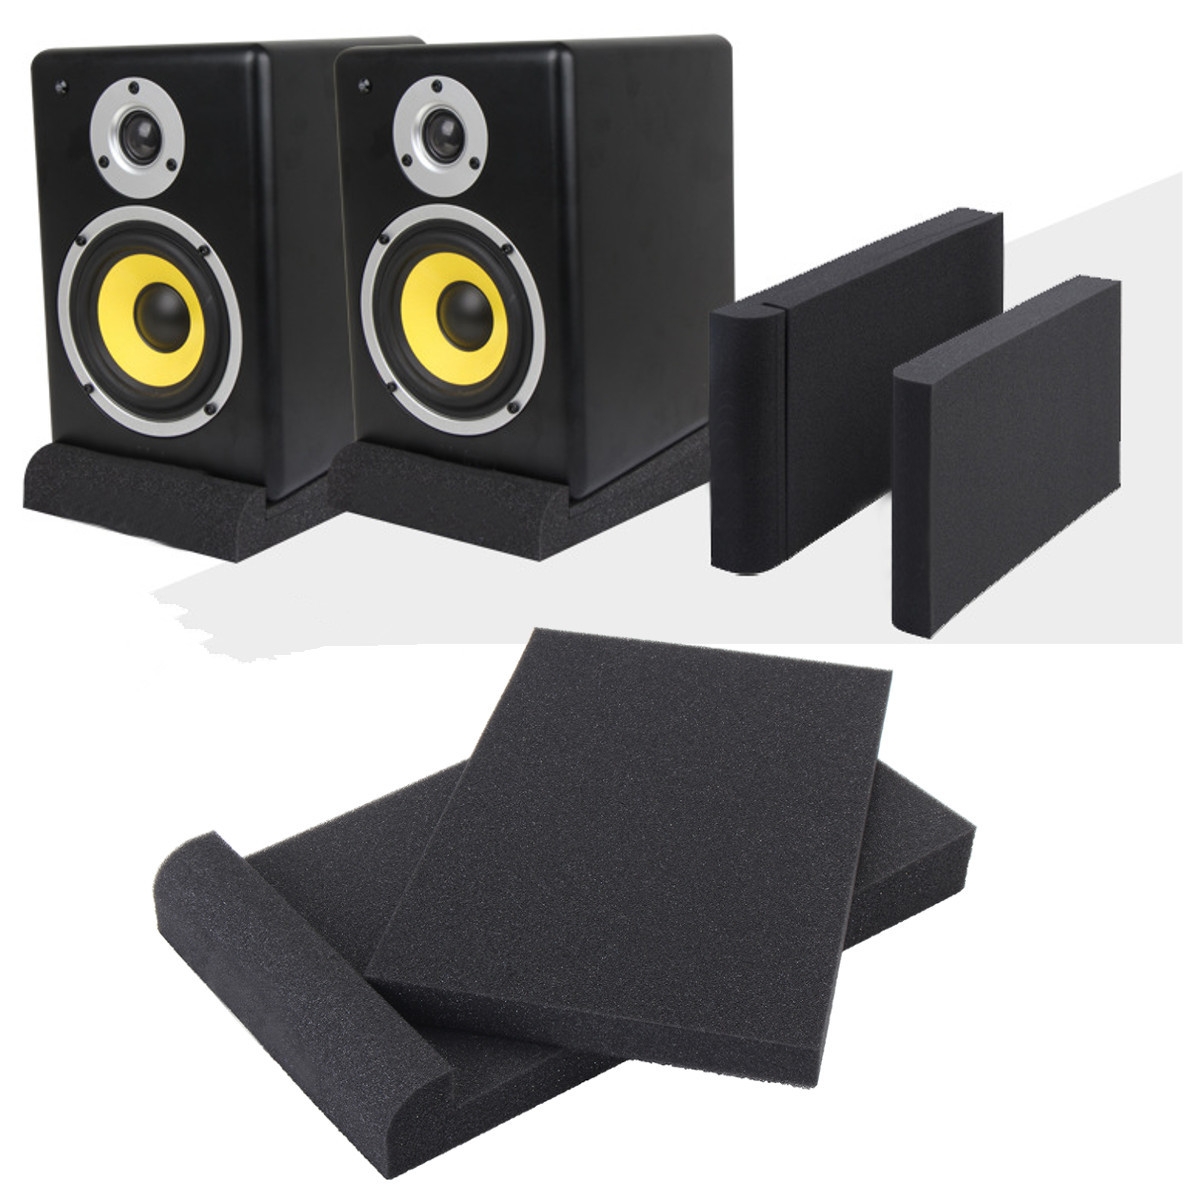 2PCS Sponge Sound Studio Monitor Speaker Acoustic Isolation Foam Isolator Pads